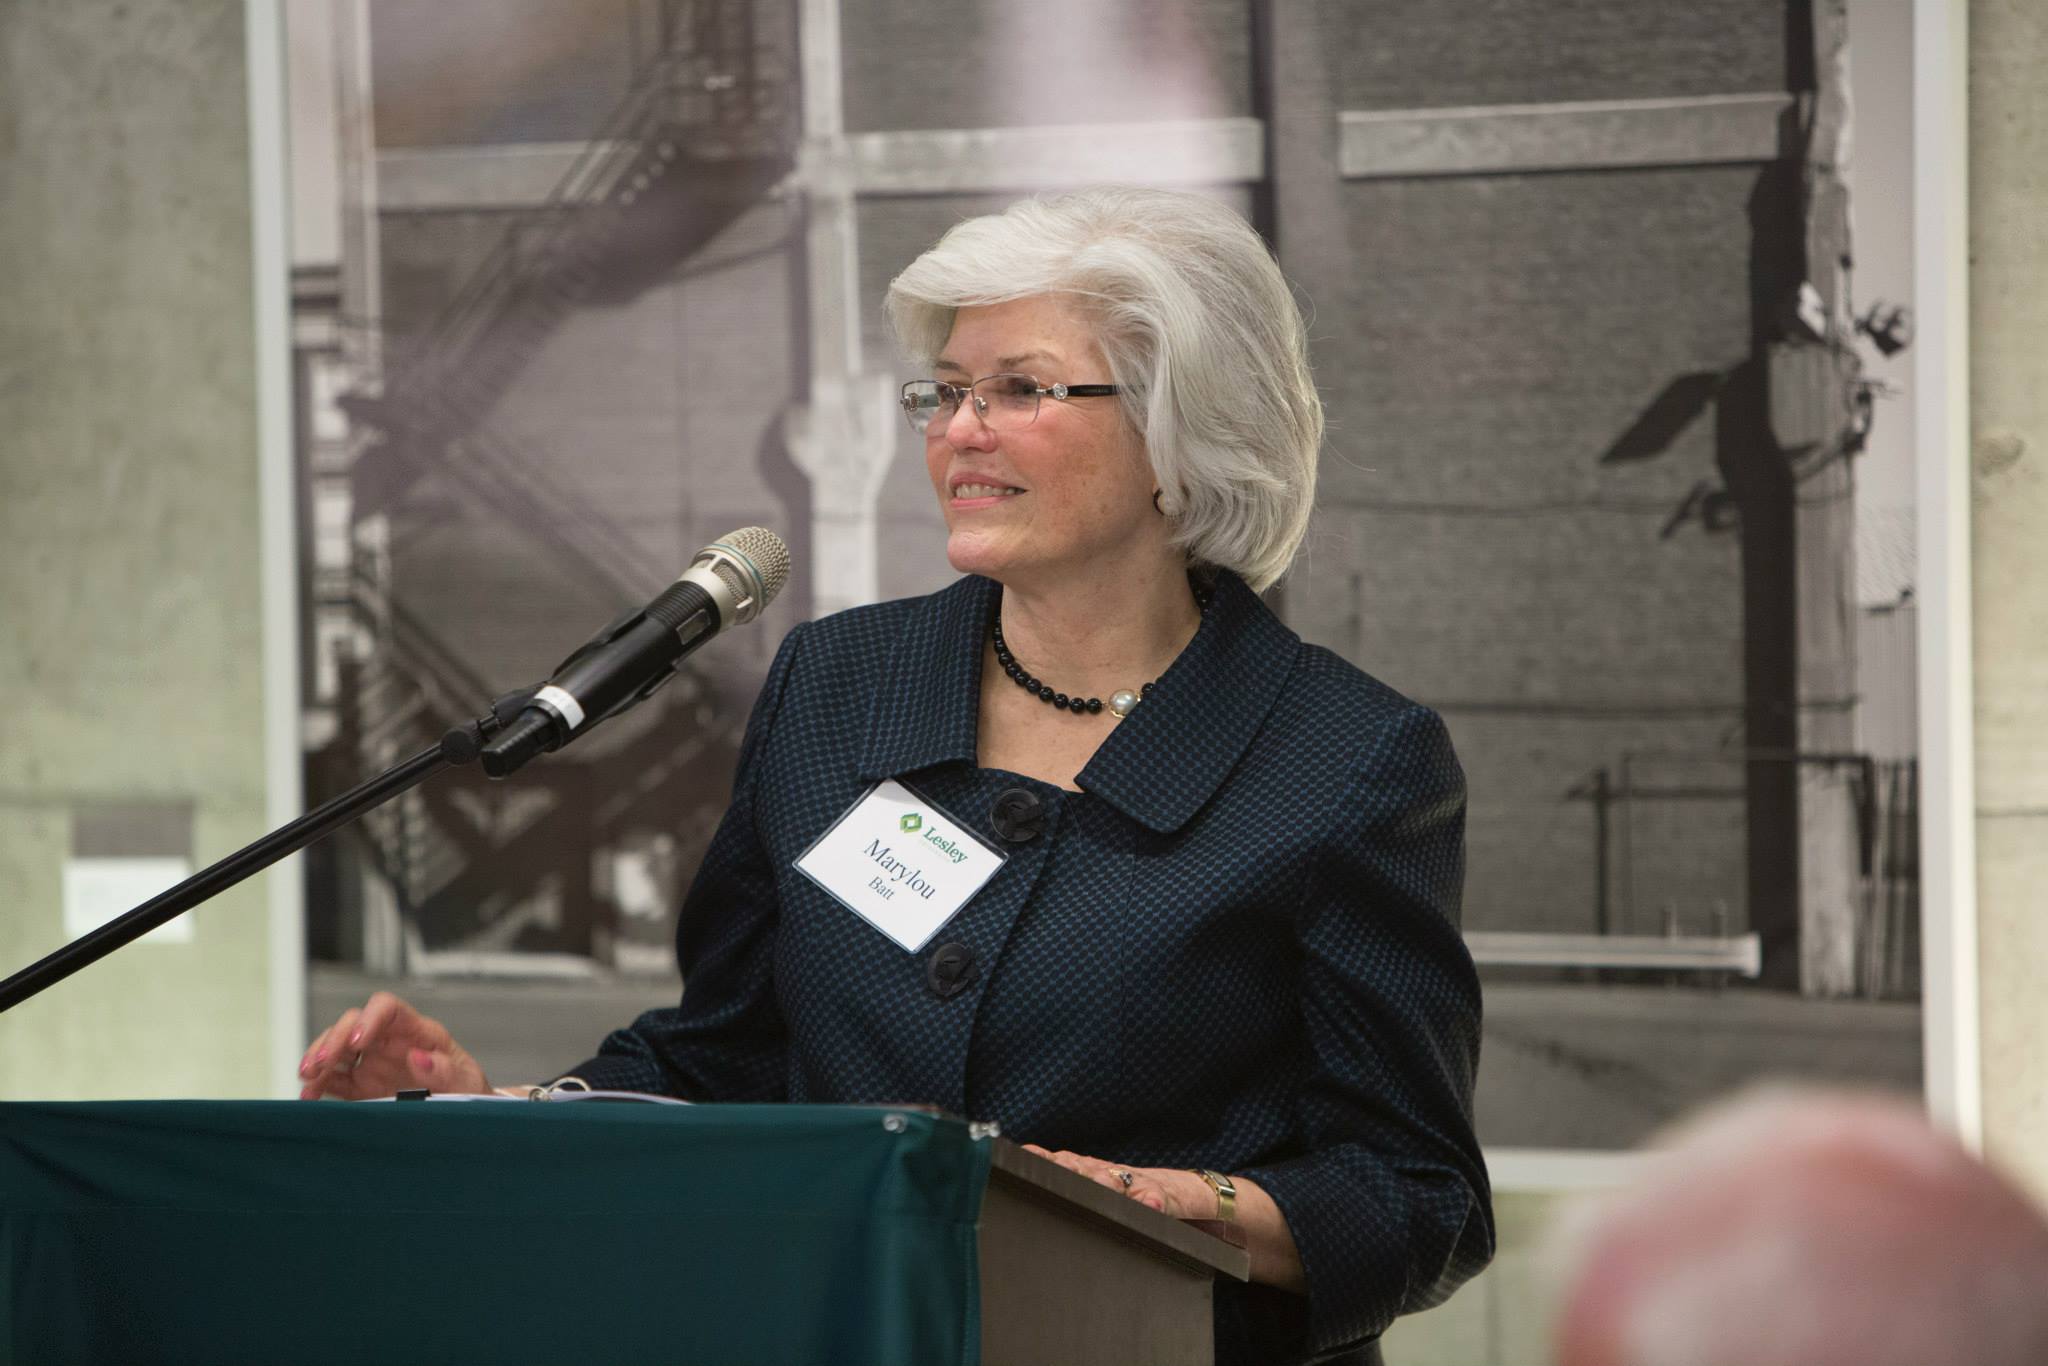 Marylou Batt speaking at a podium